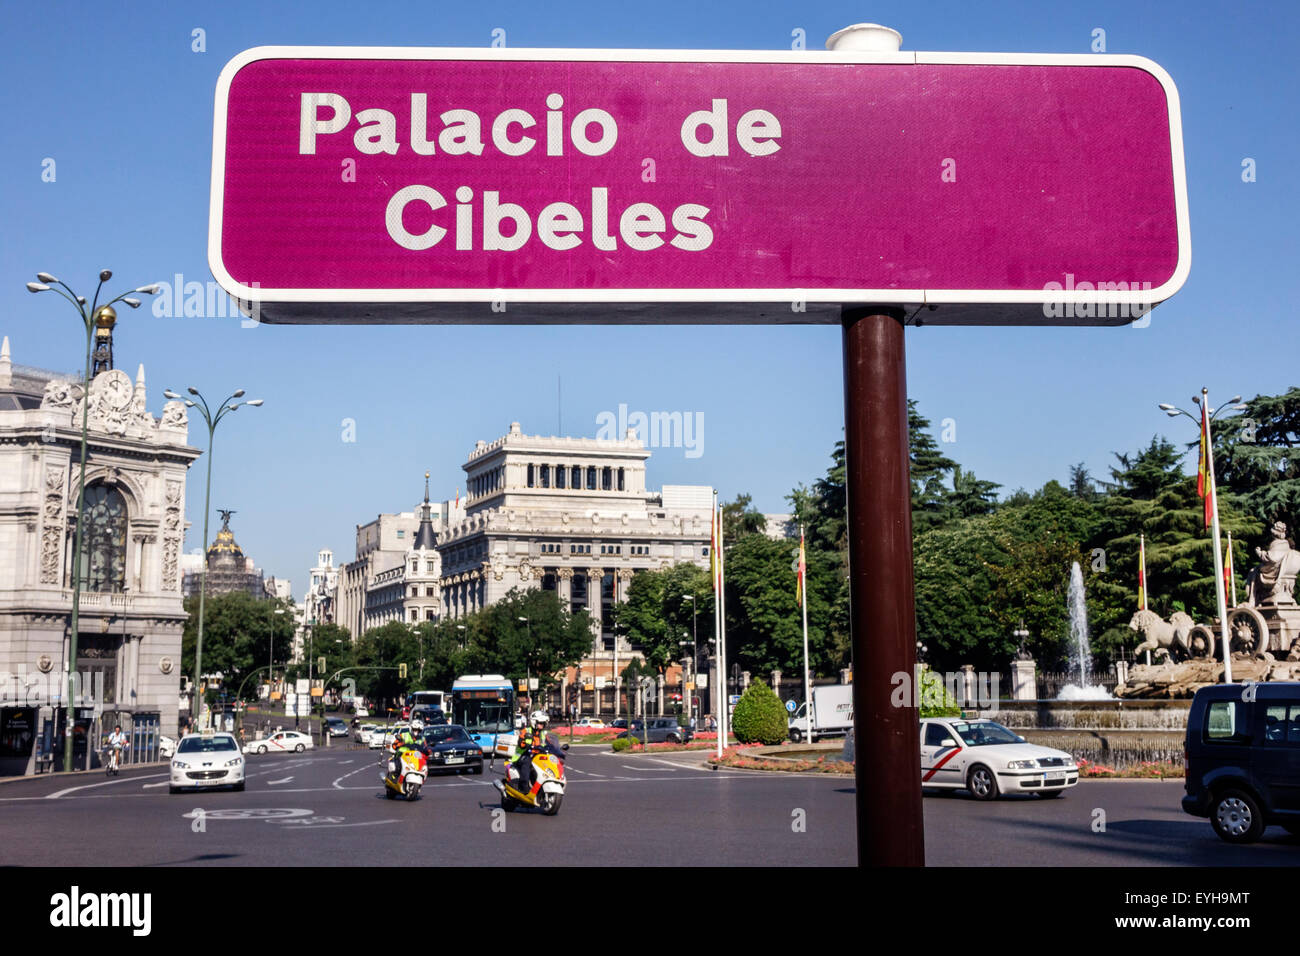 Madrid Spain,Plaza Cibeles,Palacio de Cibeles,Palacio de Comunicaciones,Spanish heritage register,cultural property,sign,location,traffic circle,Spain Stock Photo